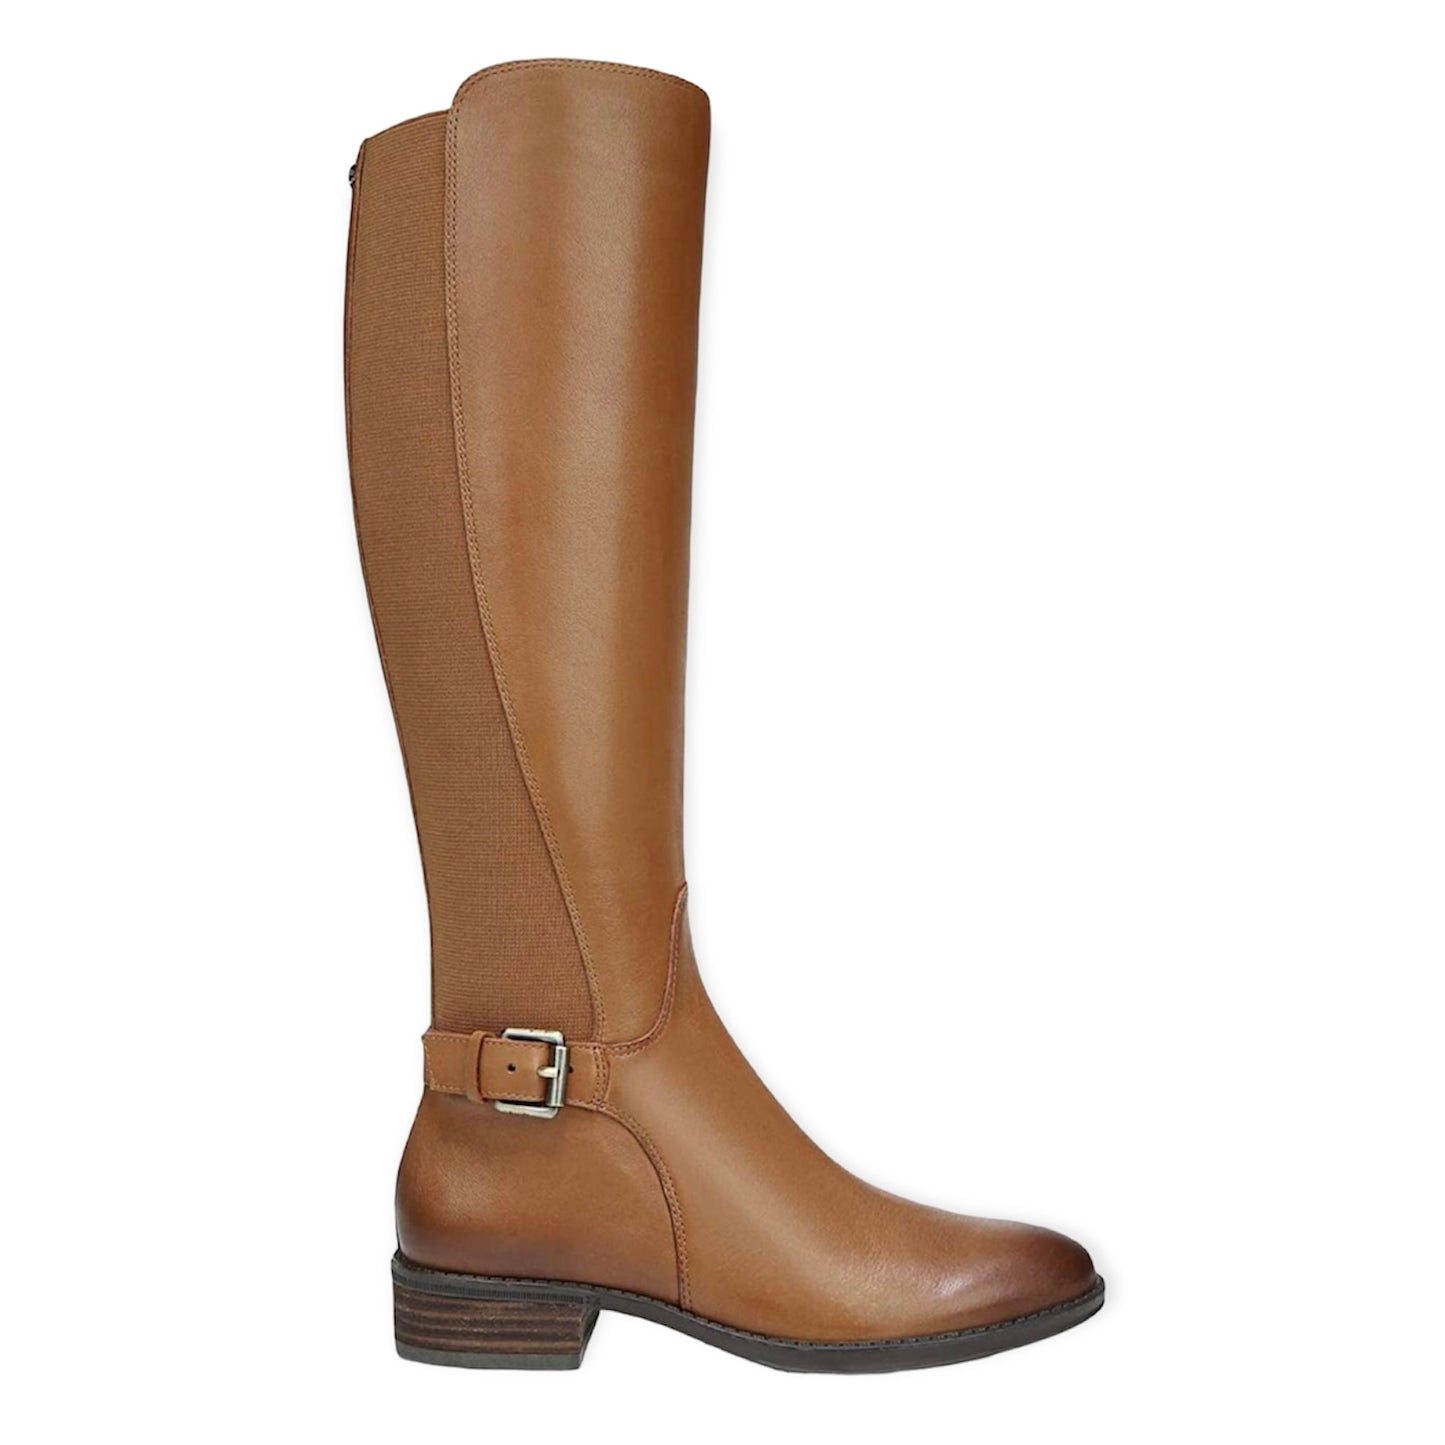 PAXTEN Leather Knee High Block Heel Almond Toe Women's Riding Boots